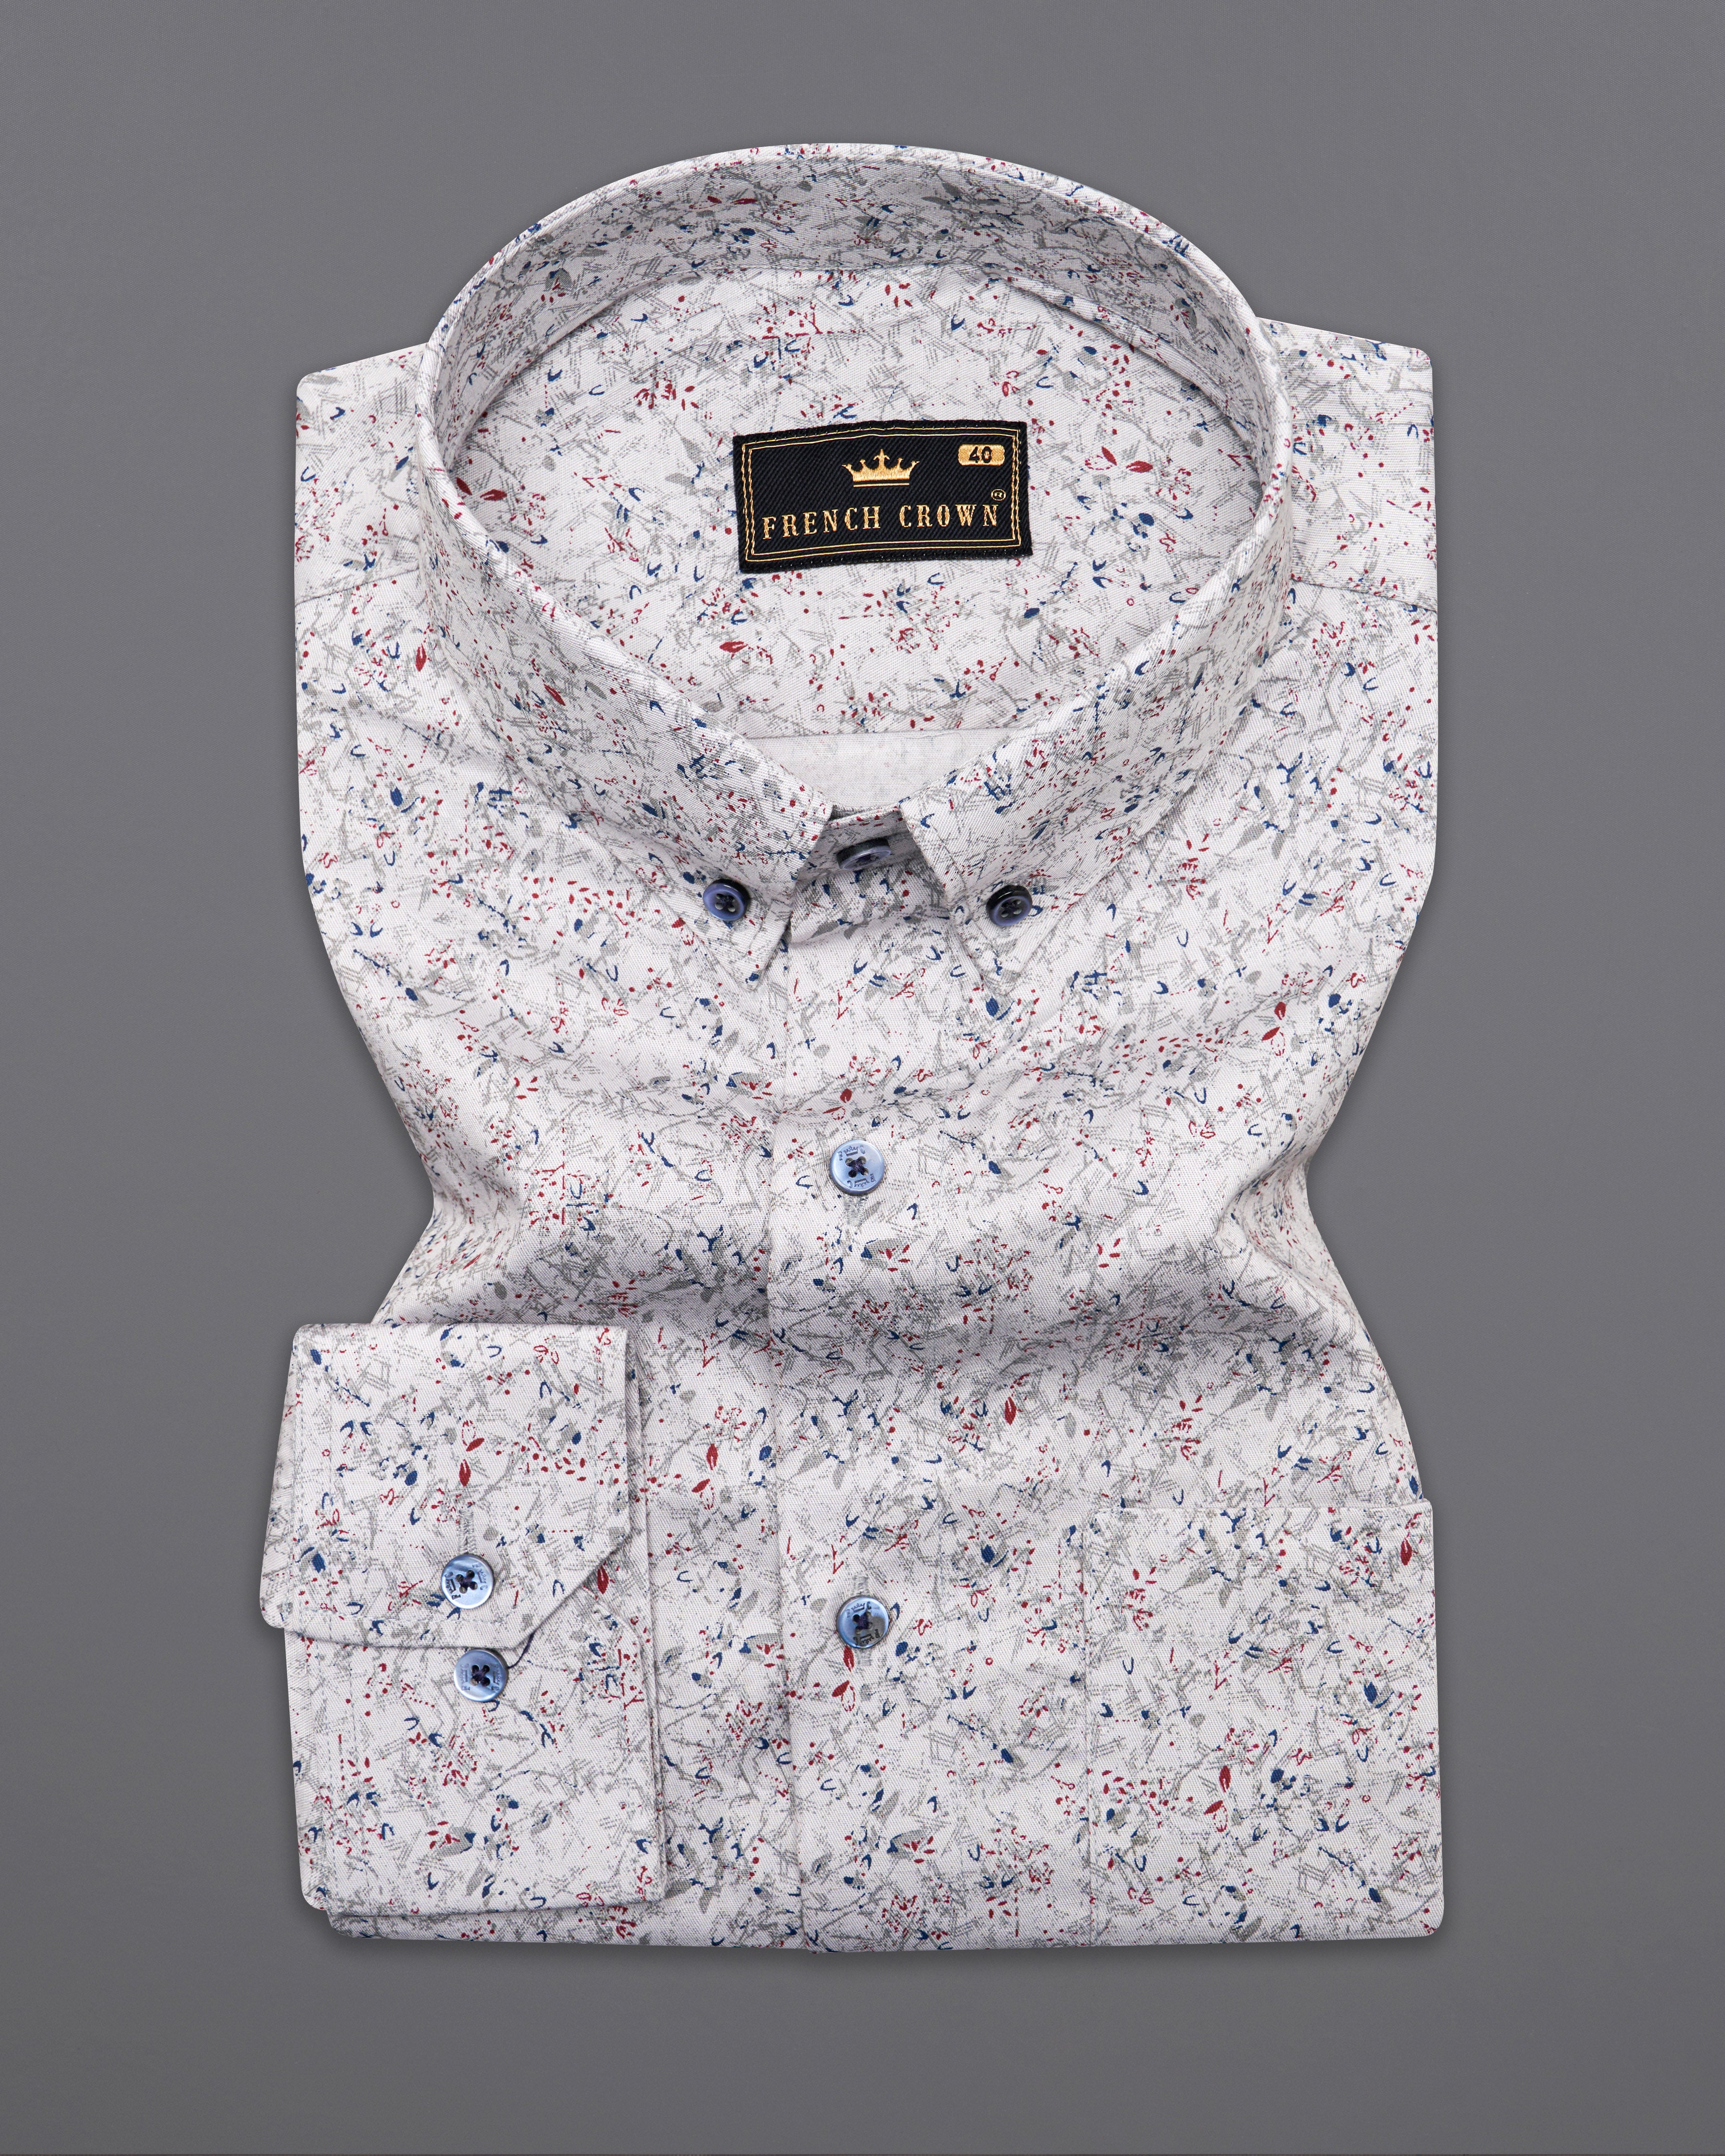 White and Downriver Blue Colour Sprint Printed Twill Premium Cotton Shirt